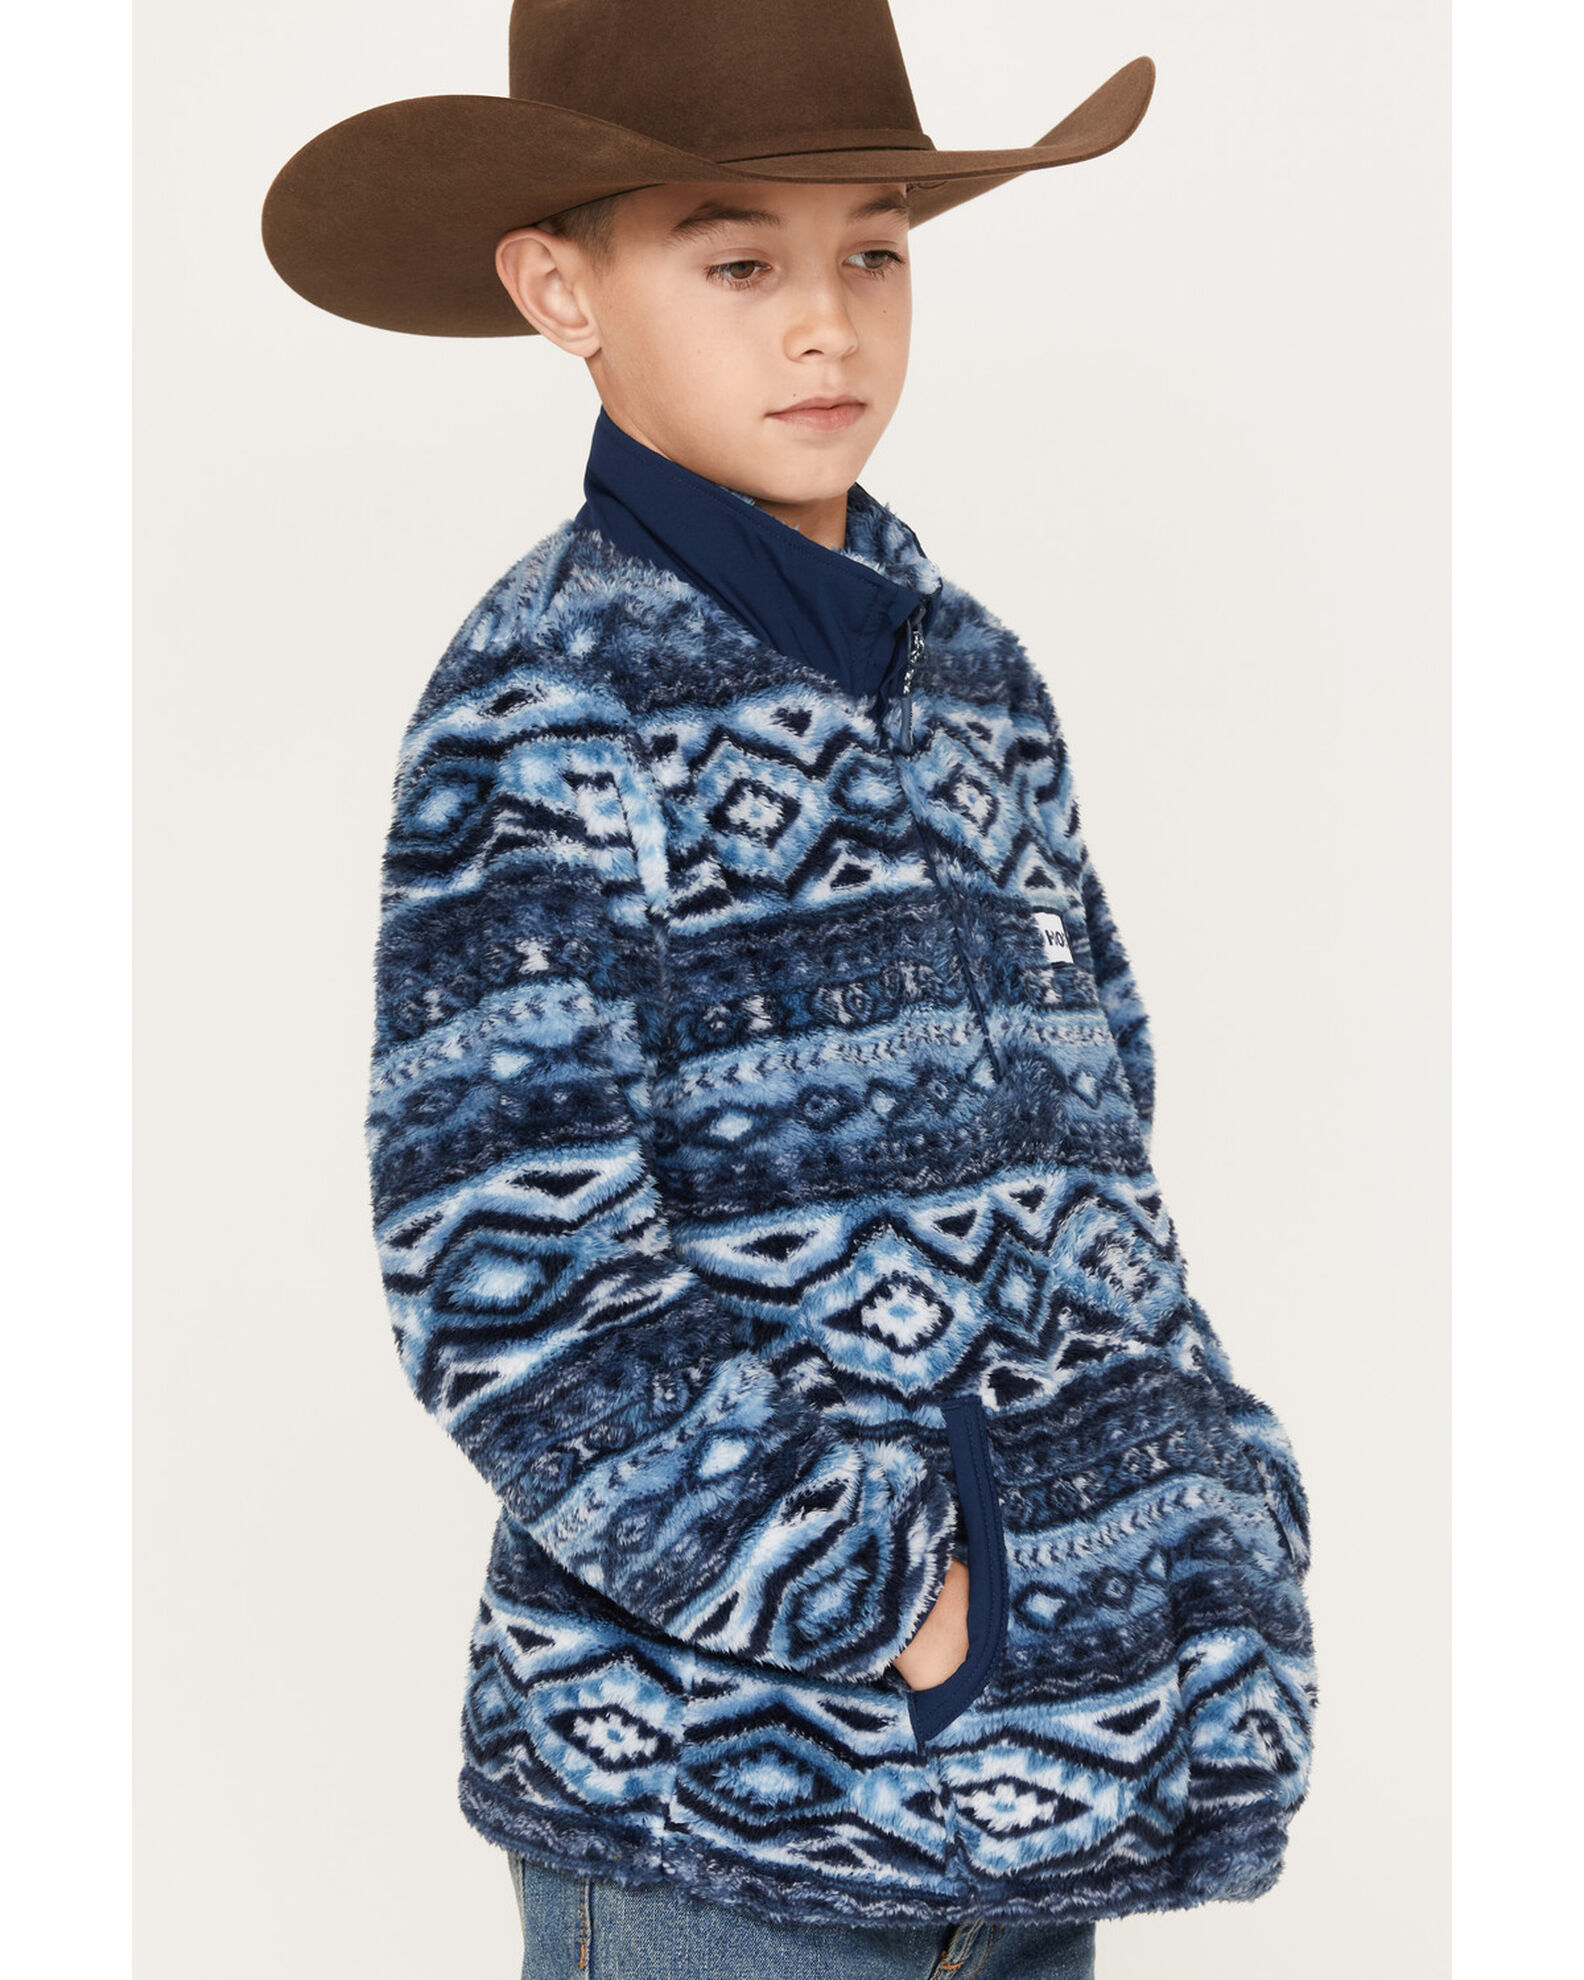 Hooey Boys' Southwestern Print Fleece Pullover Jacket